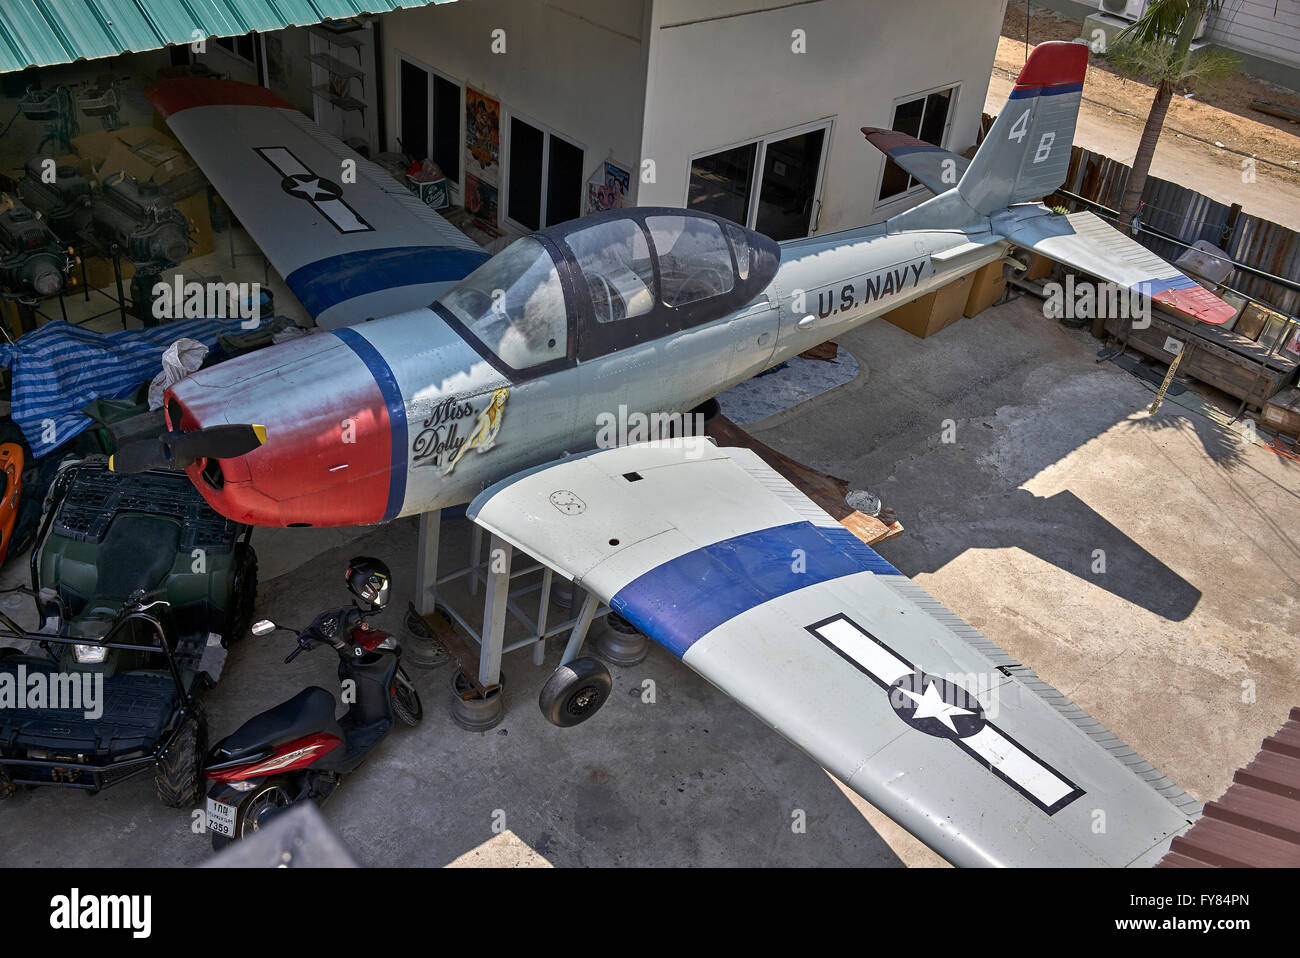 World War 2 plane. USA military aircraft undergoing restoration Stock Photo